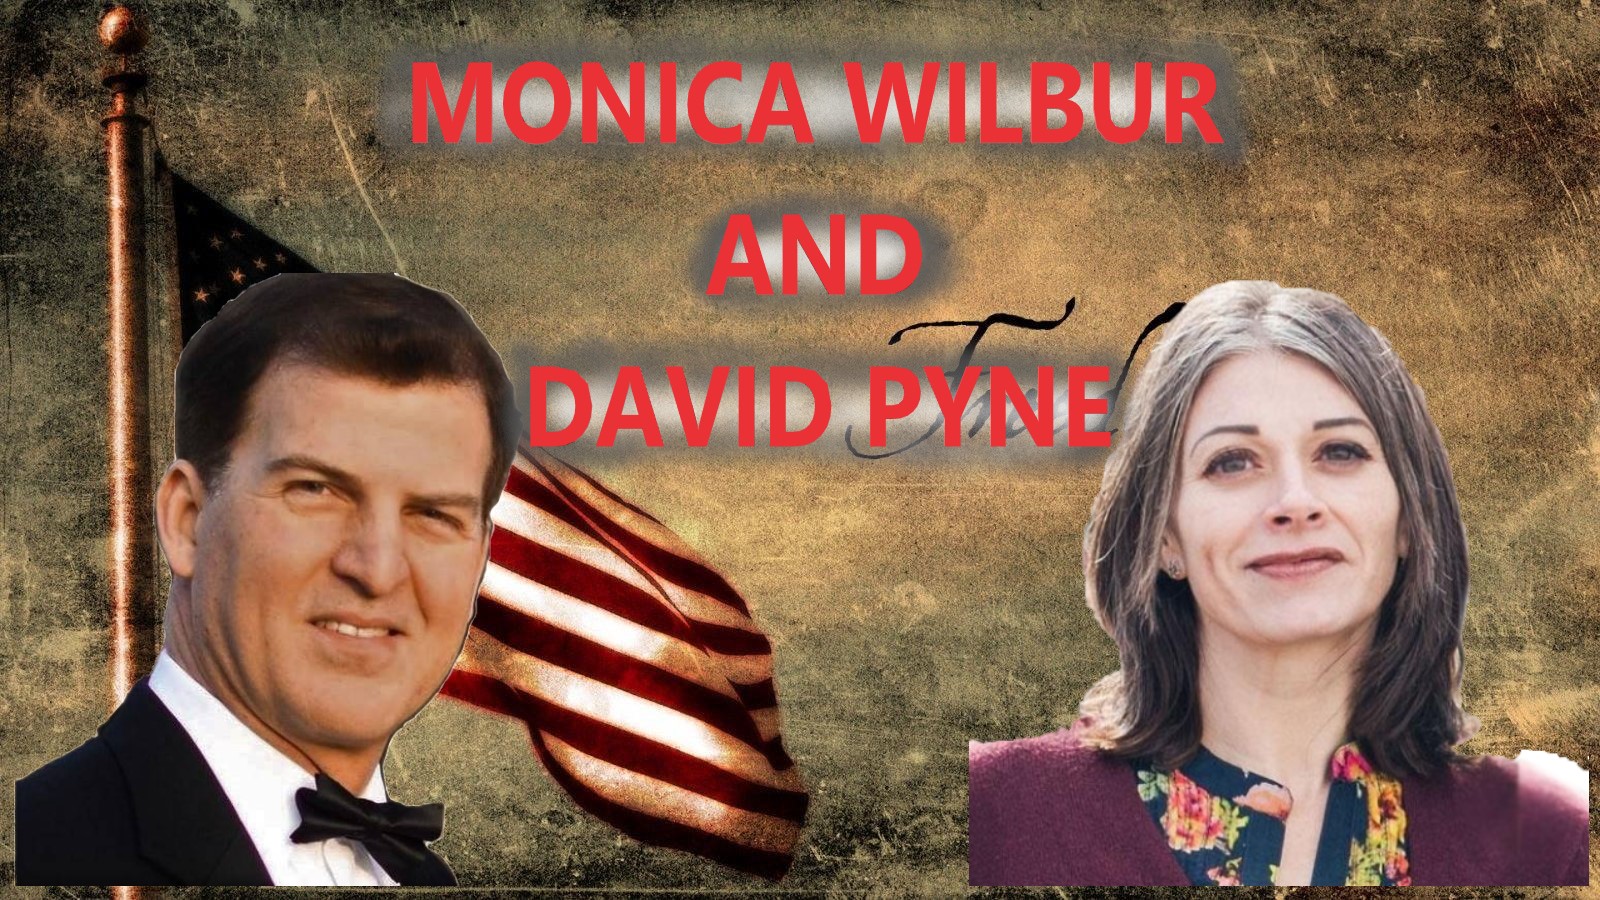 David Pyne on National Defense and Monica Wilbur For Utah Education